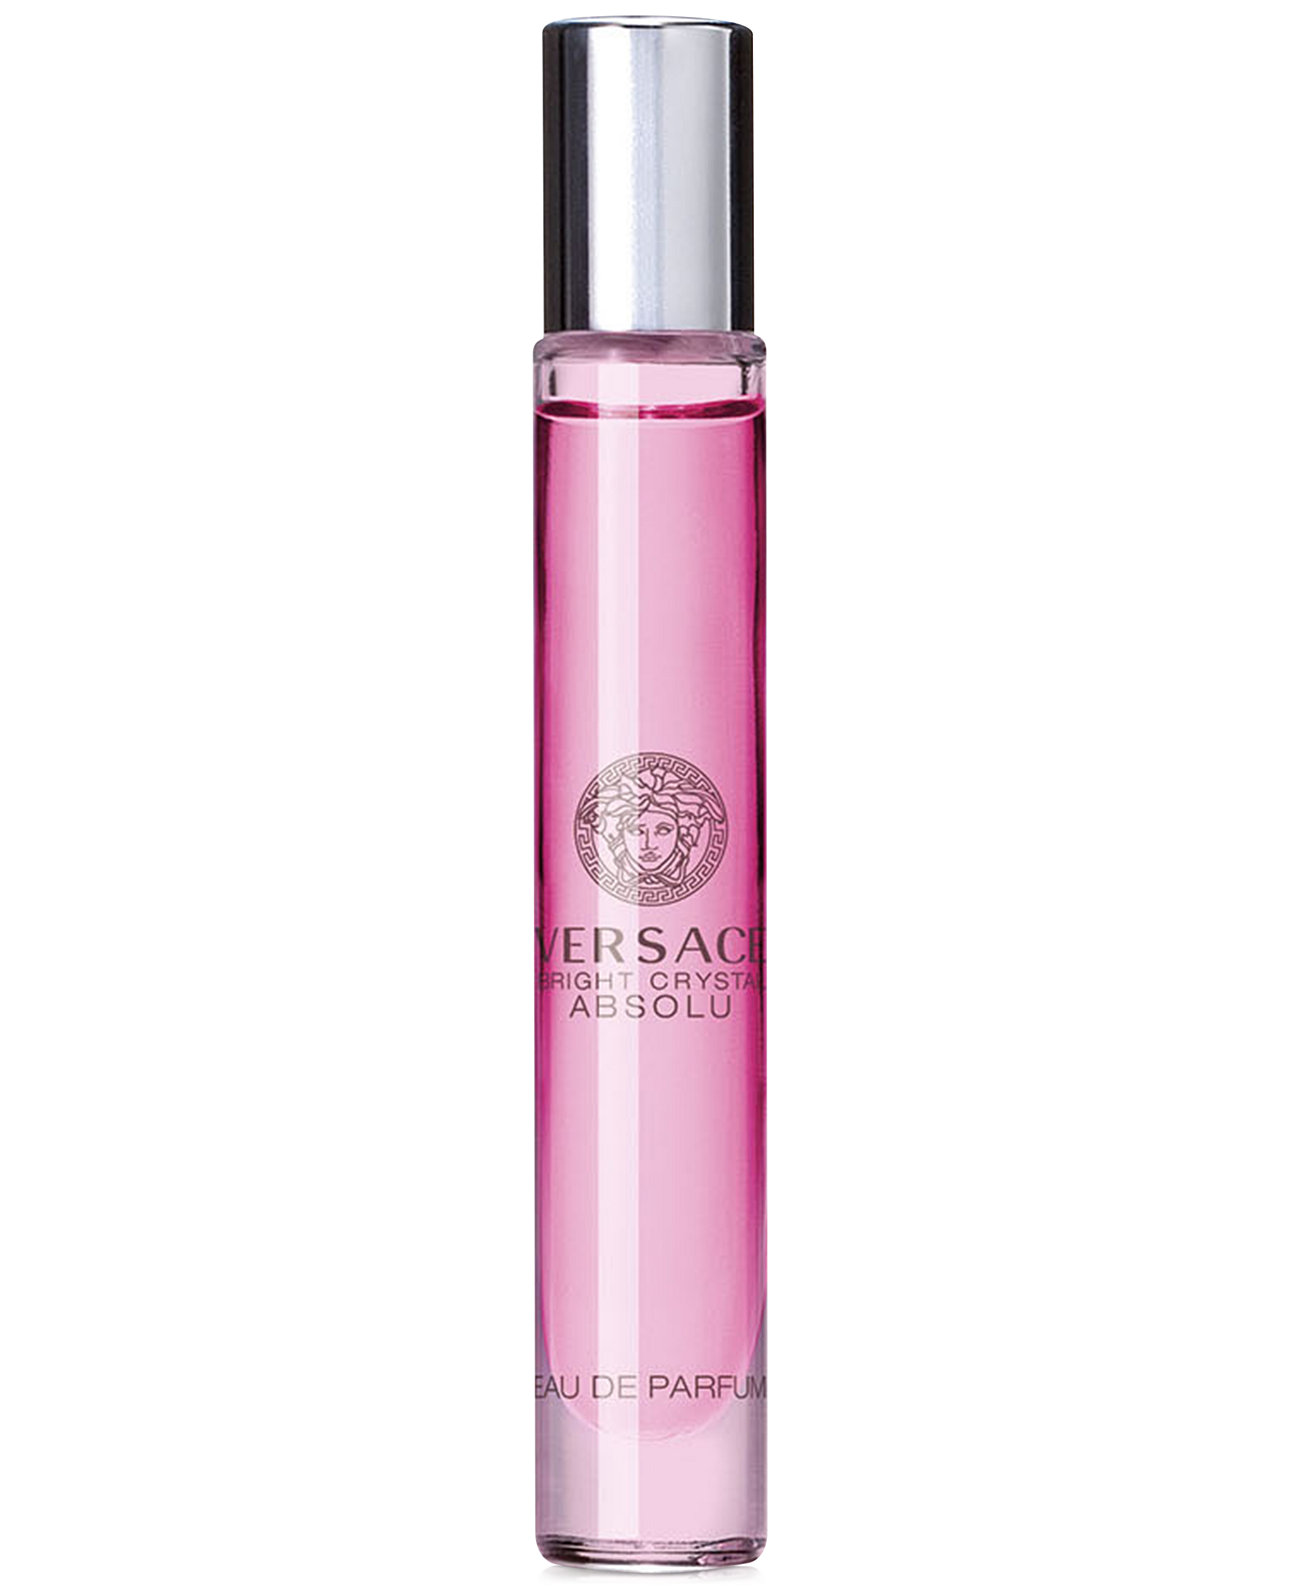 Bright Crystal Absolu Eau de Parfum Travel Spray, 0.3 oz. Versace